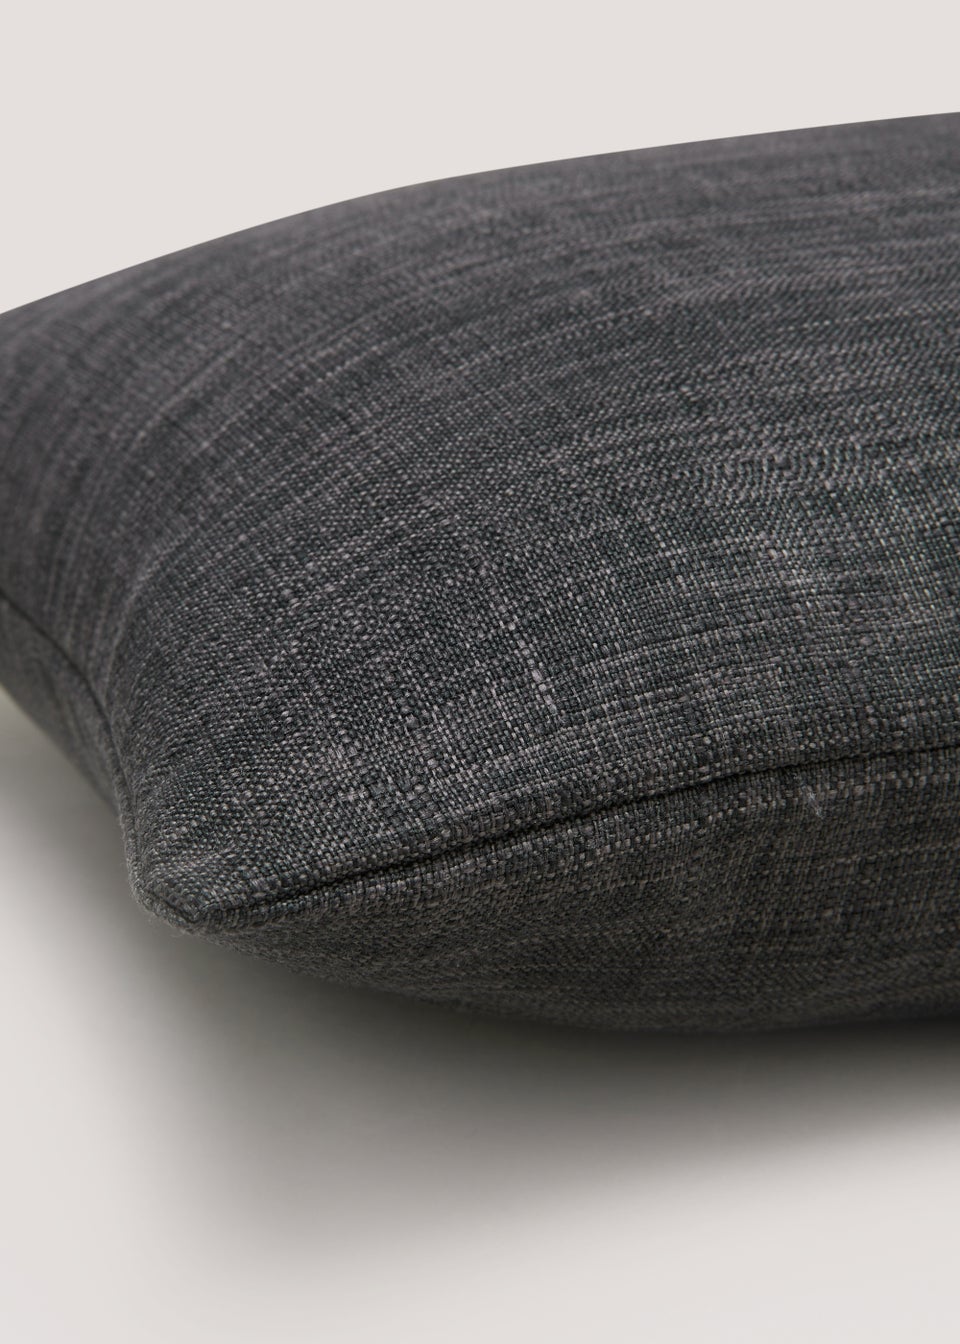 Black Linen-Look Cushion (43cm x 43cm)